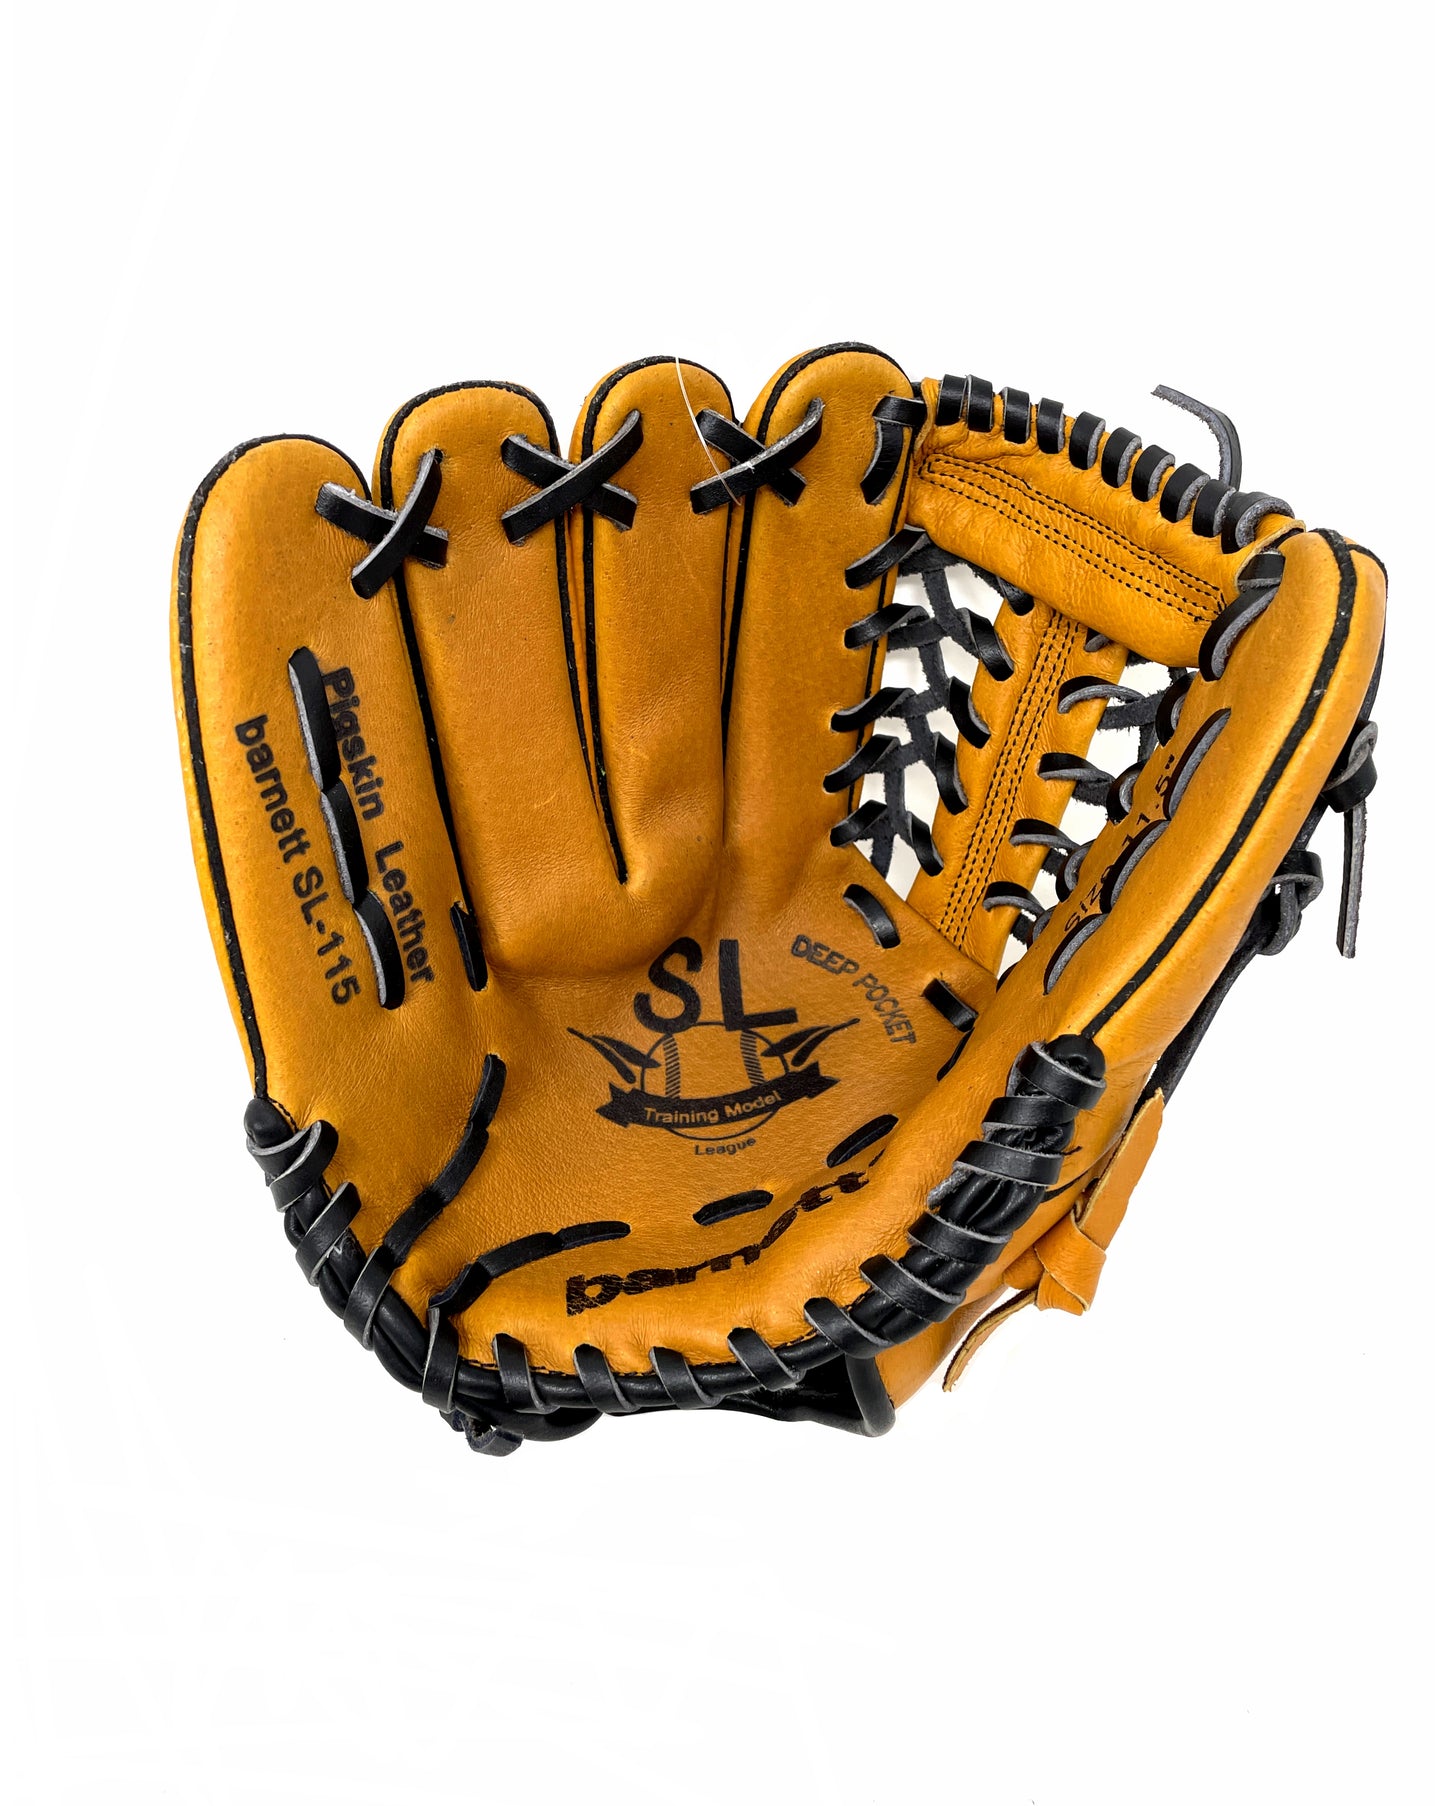 SL-115 gant de baseball cuir infield/outfield 11, Marron